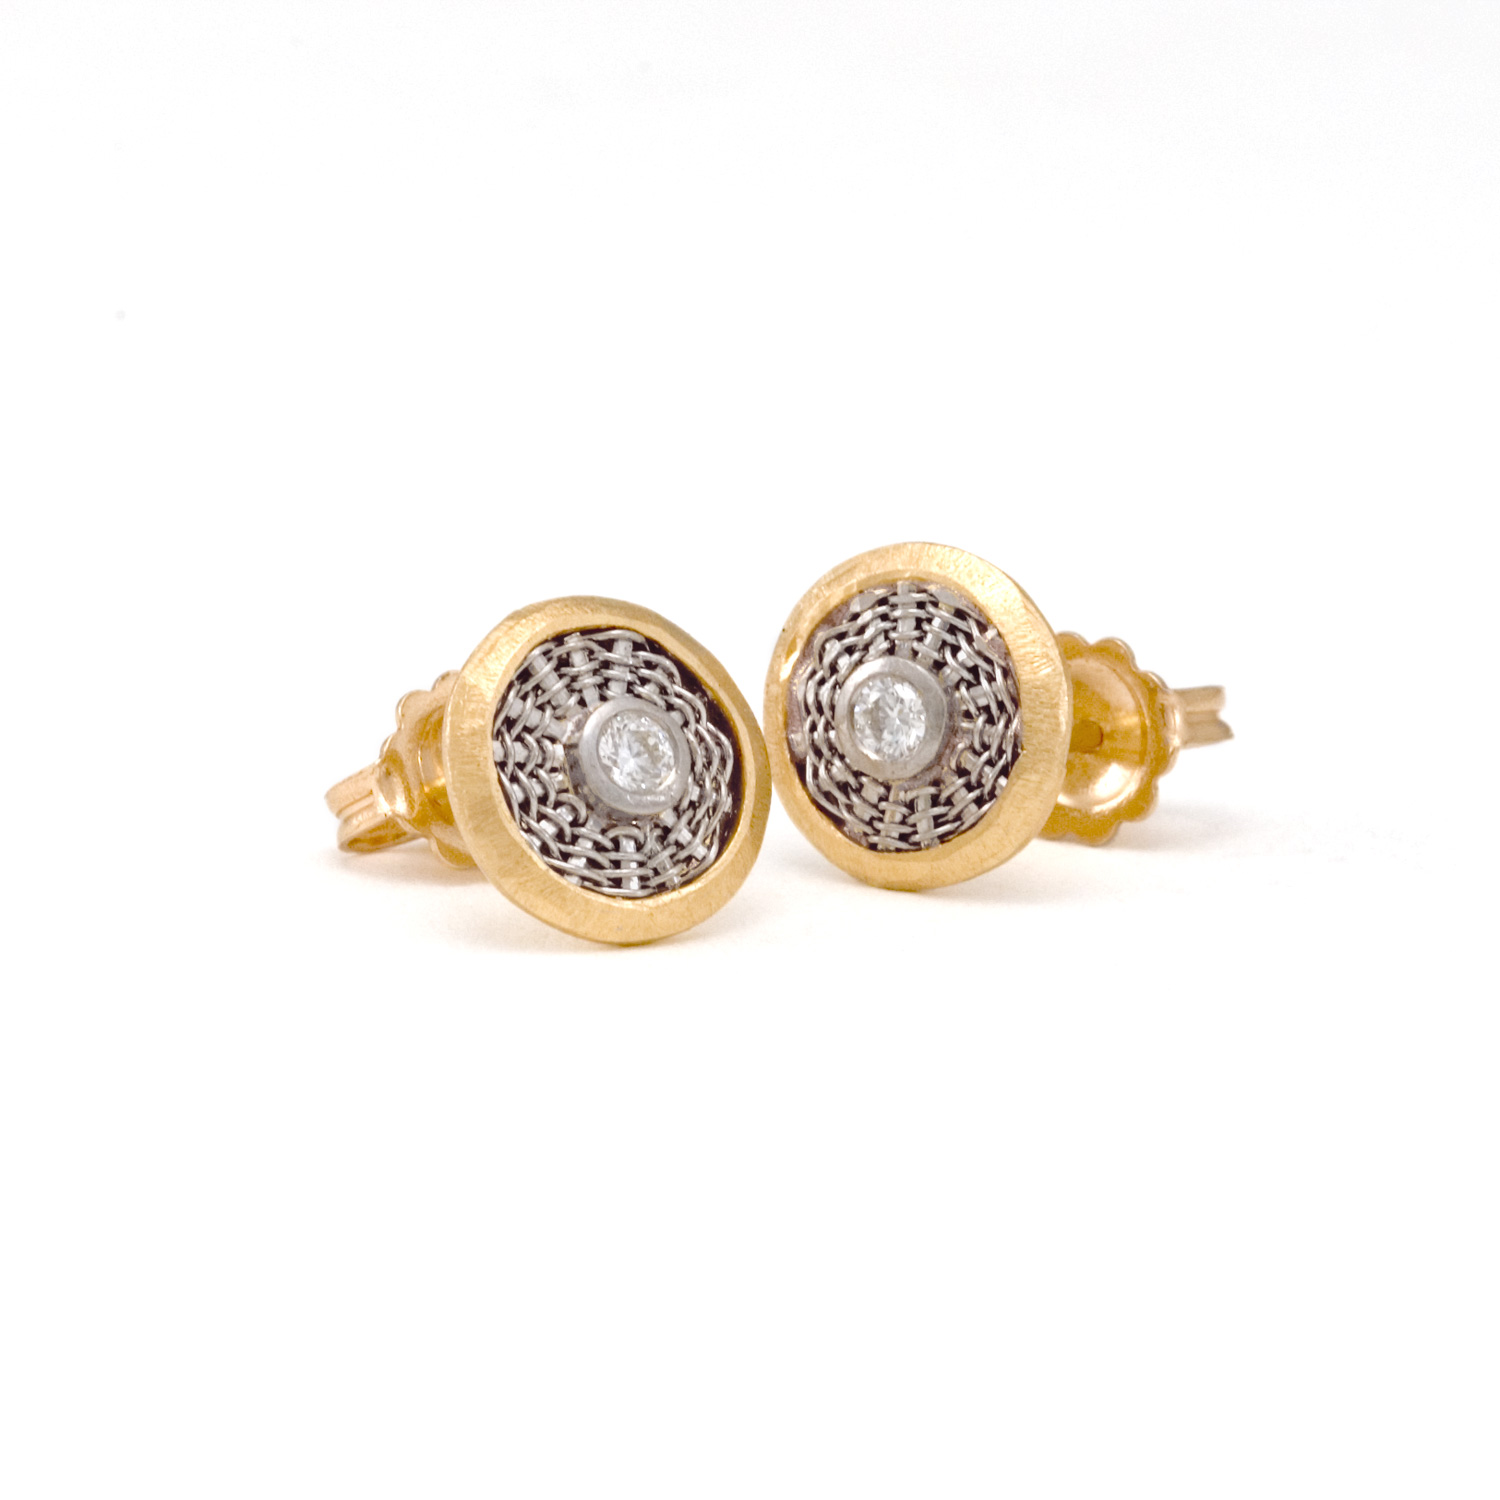 Sunburst Weave Stud Earrings in 18k gold & platinum with diamonds by Tamberlaine